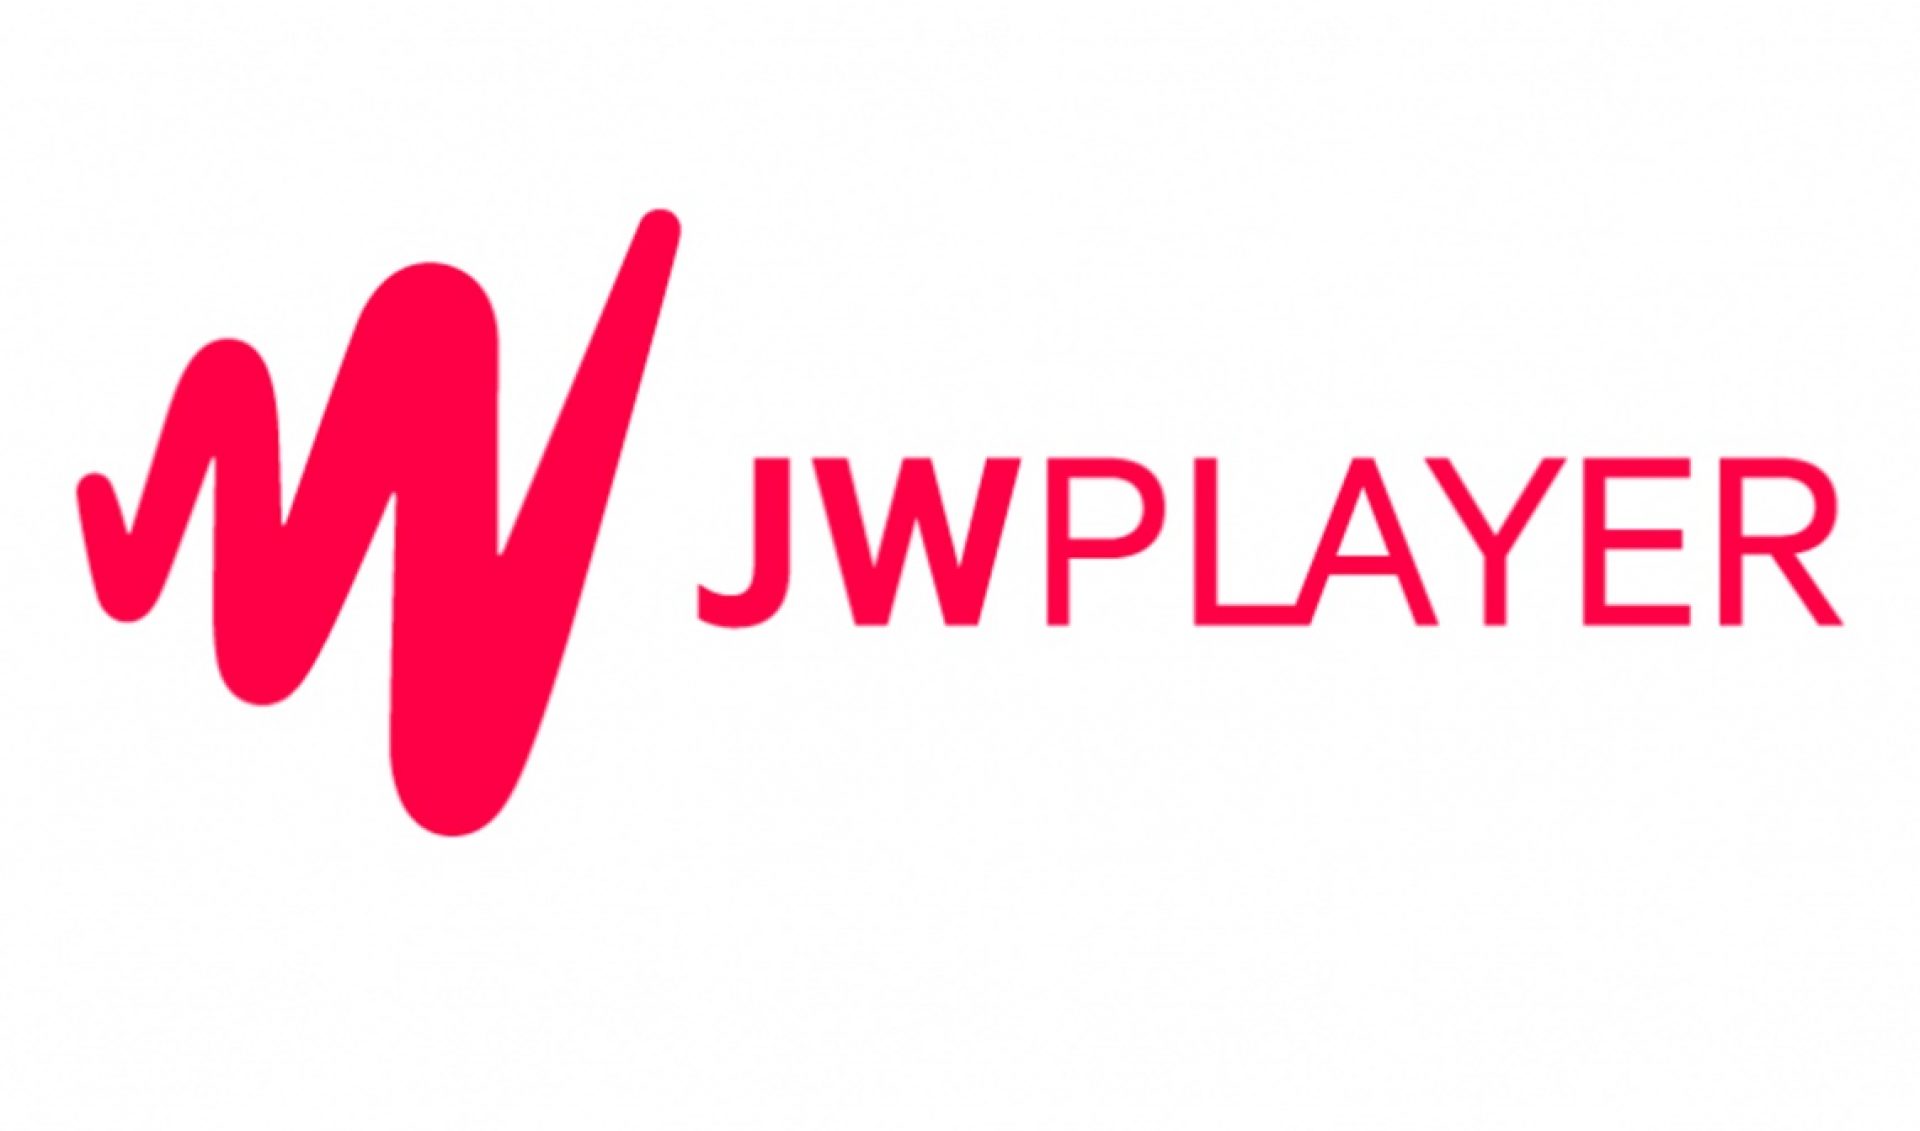 JW Player Announces $20 Million Series D Funding Round